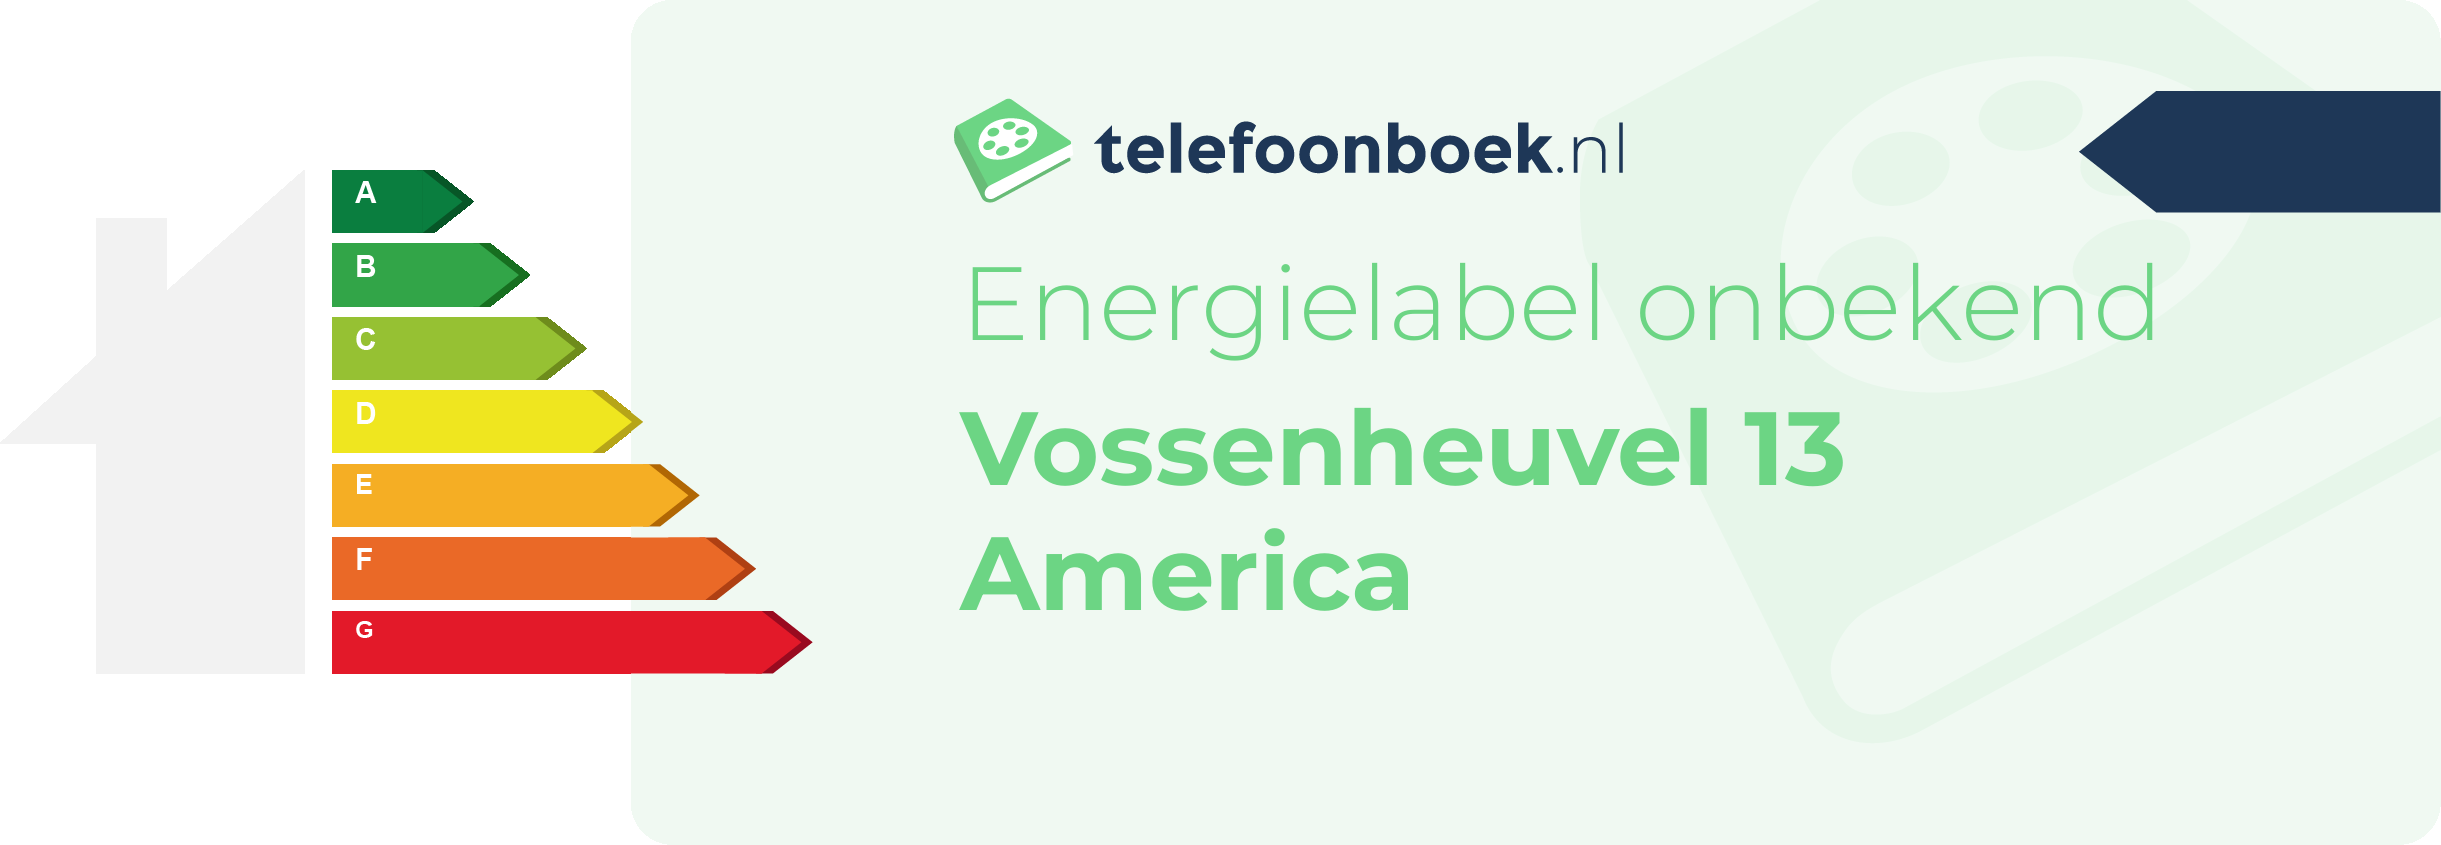 Energielabel Vossenheuvel 13 America